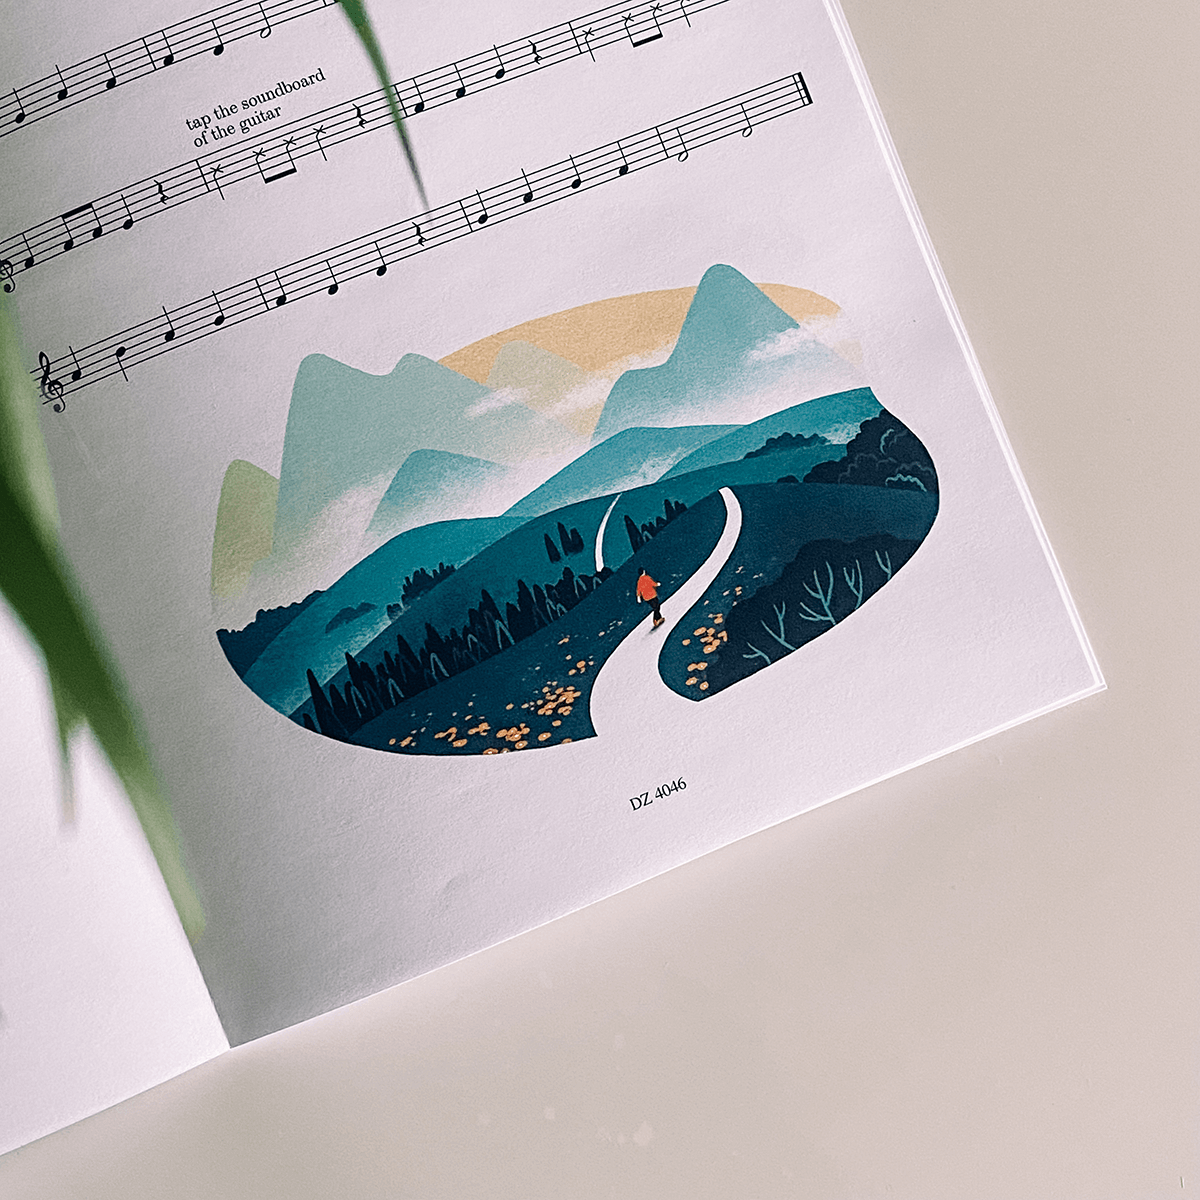 Sasha-Kolesnik_Music-book-illustration_Misty mountains